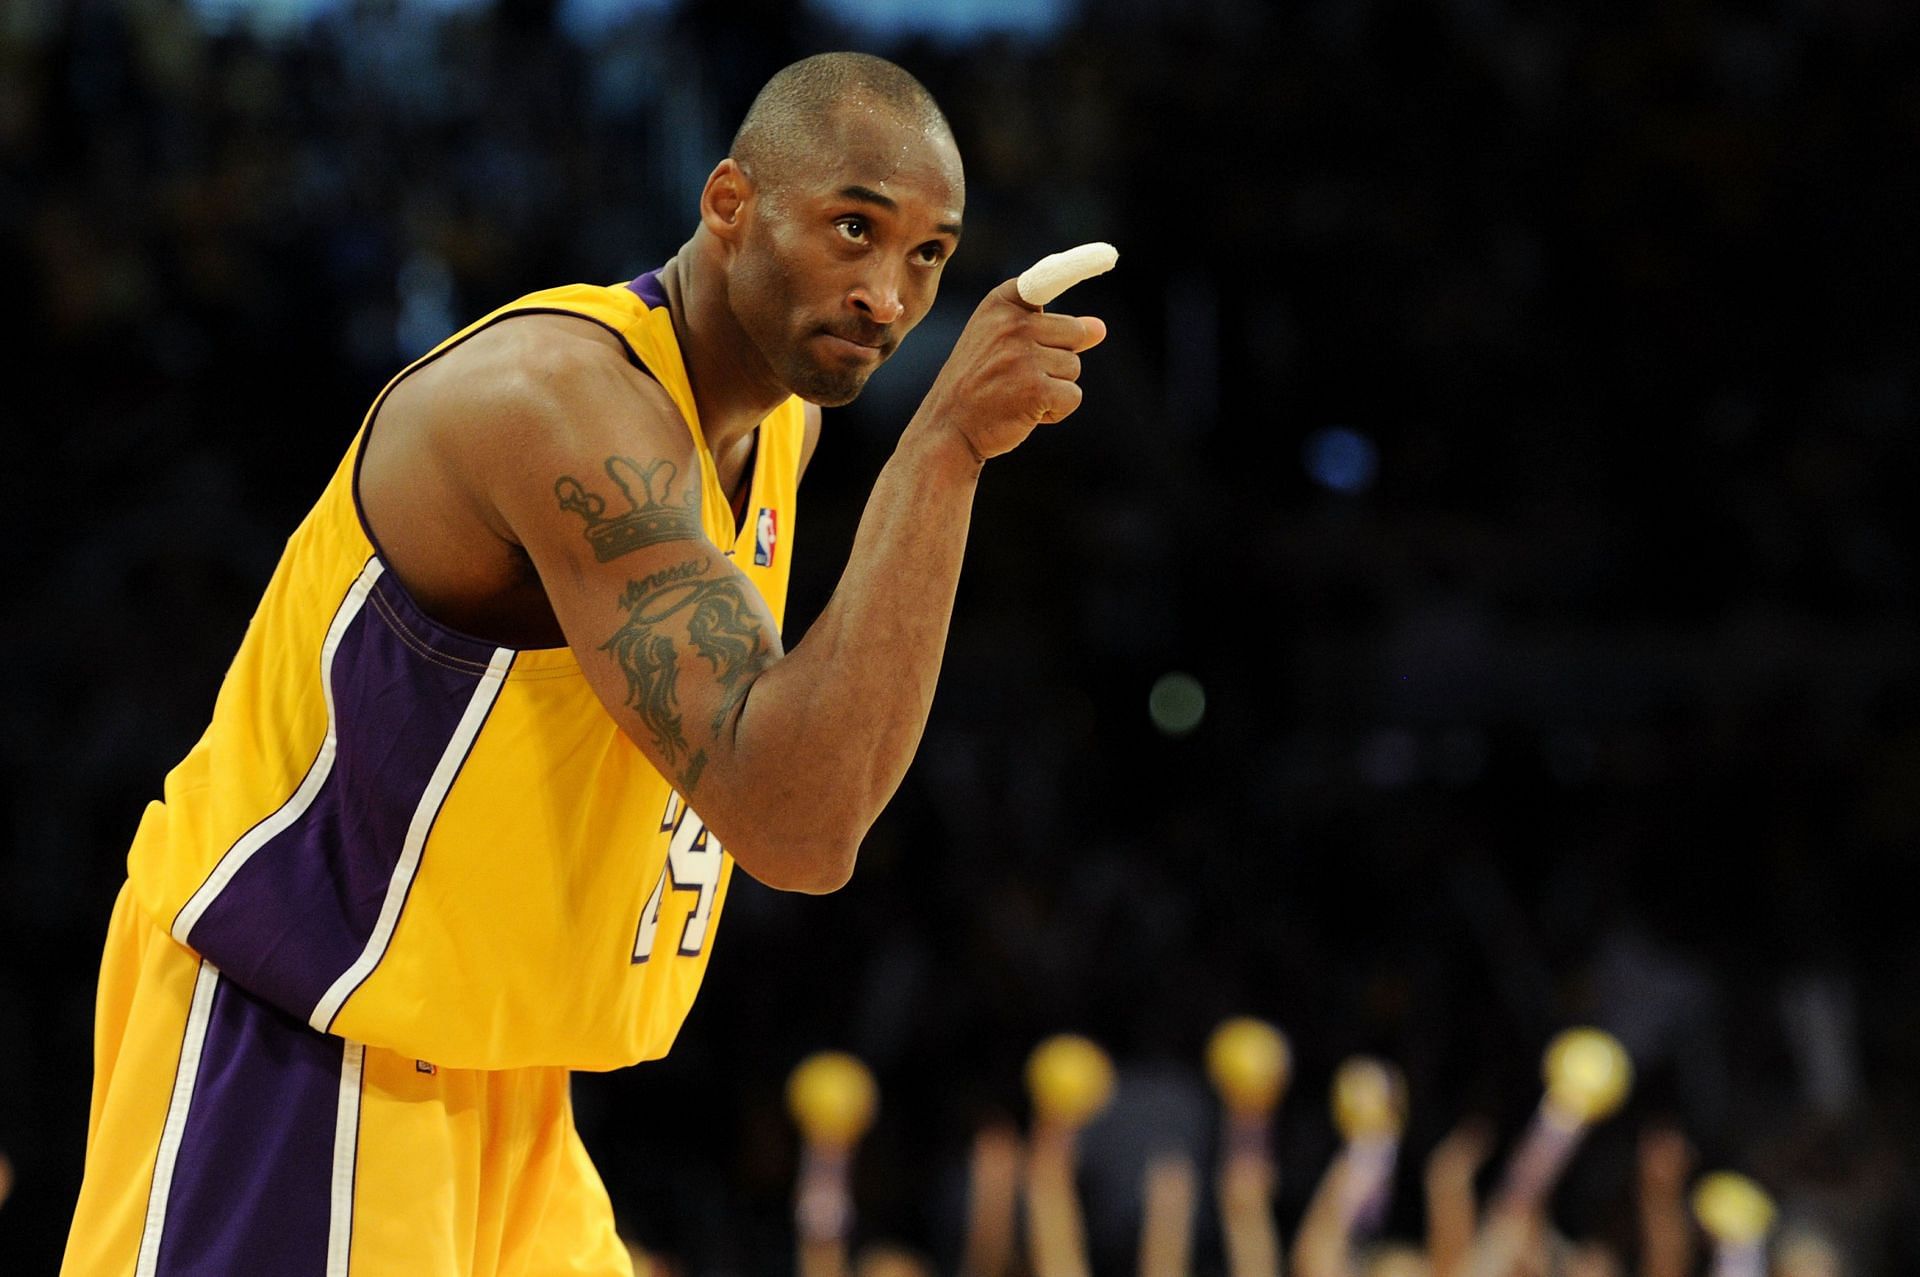 LA Lakers and NBA legend Kobe Bryant